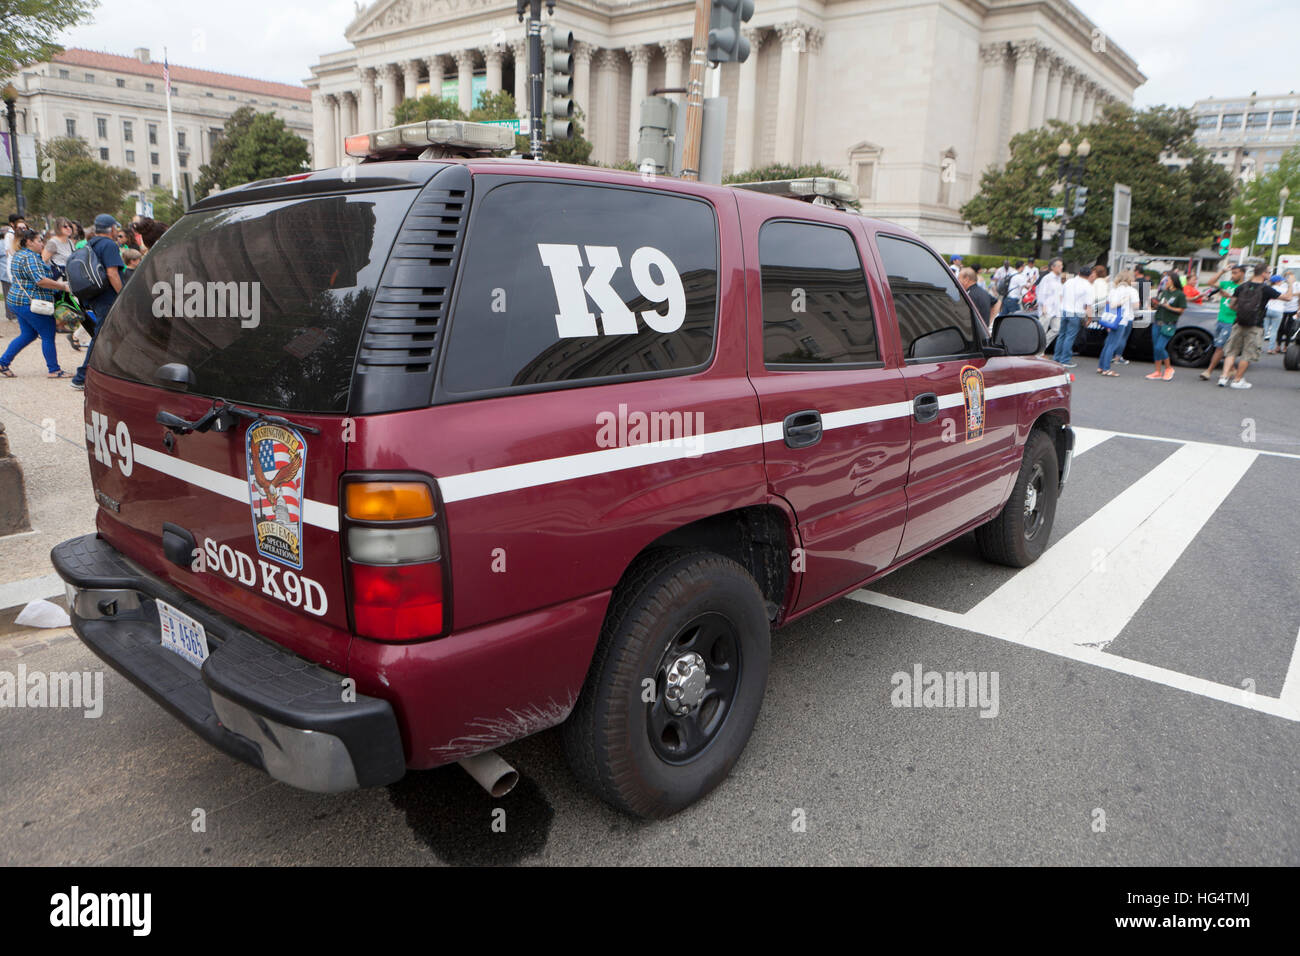 K9 EMS truck responding to an outdoor event - Washington, DC USA Stock Photo